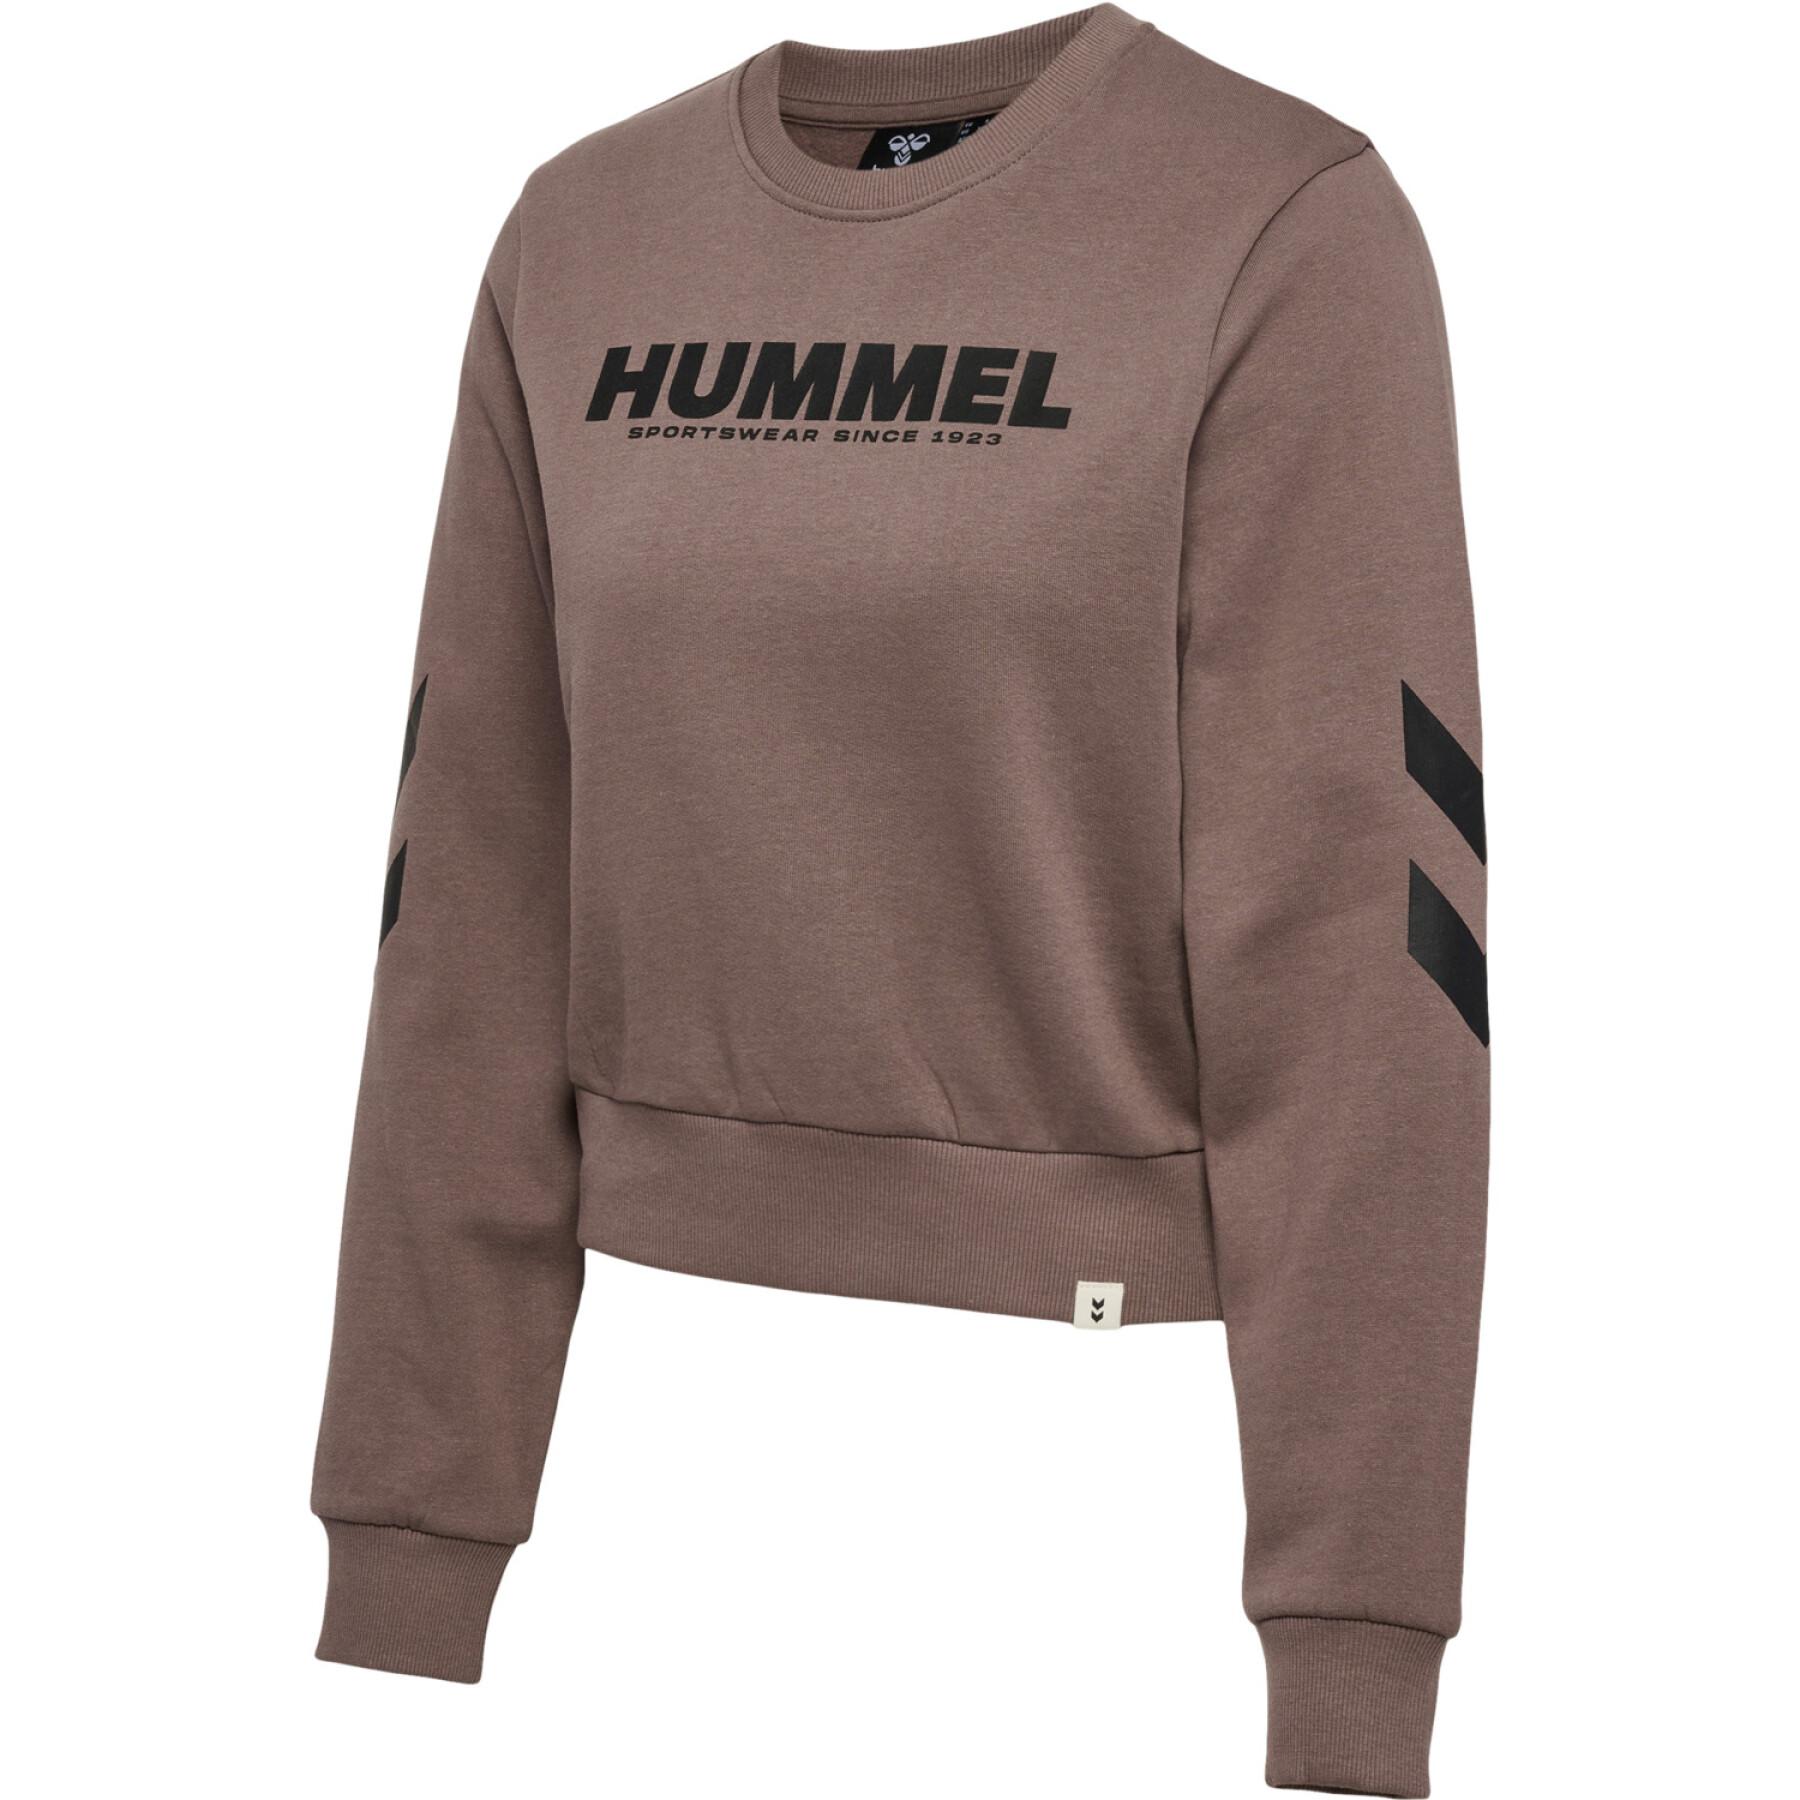 Sweatshirt woman Hummel Legacy